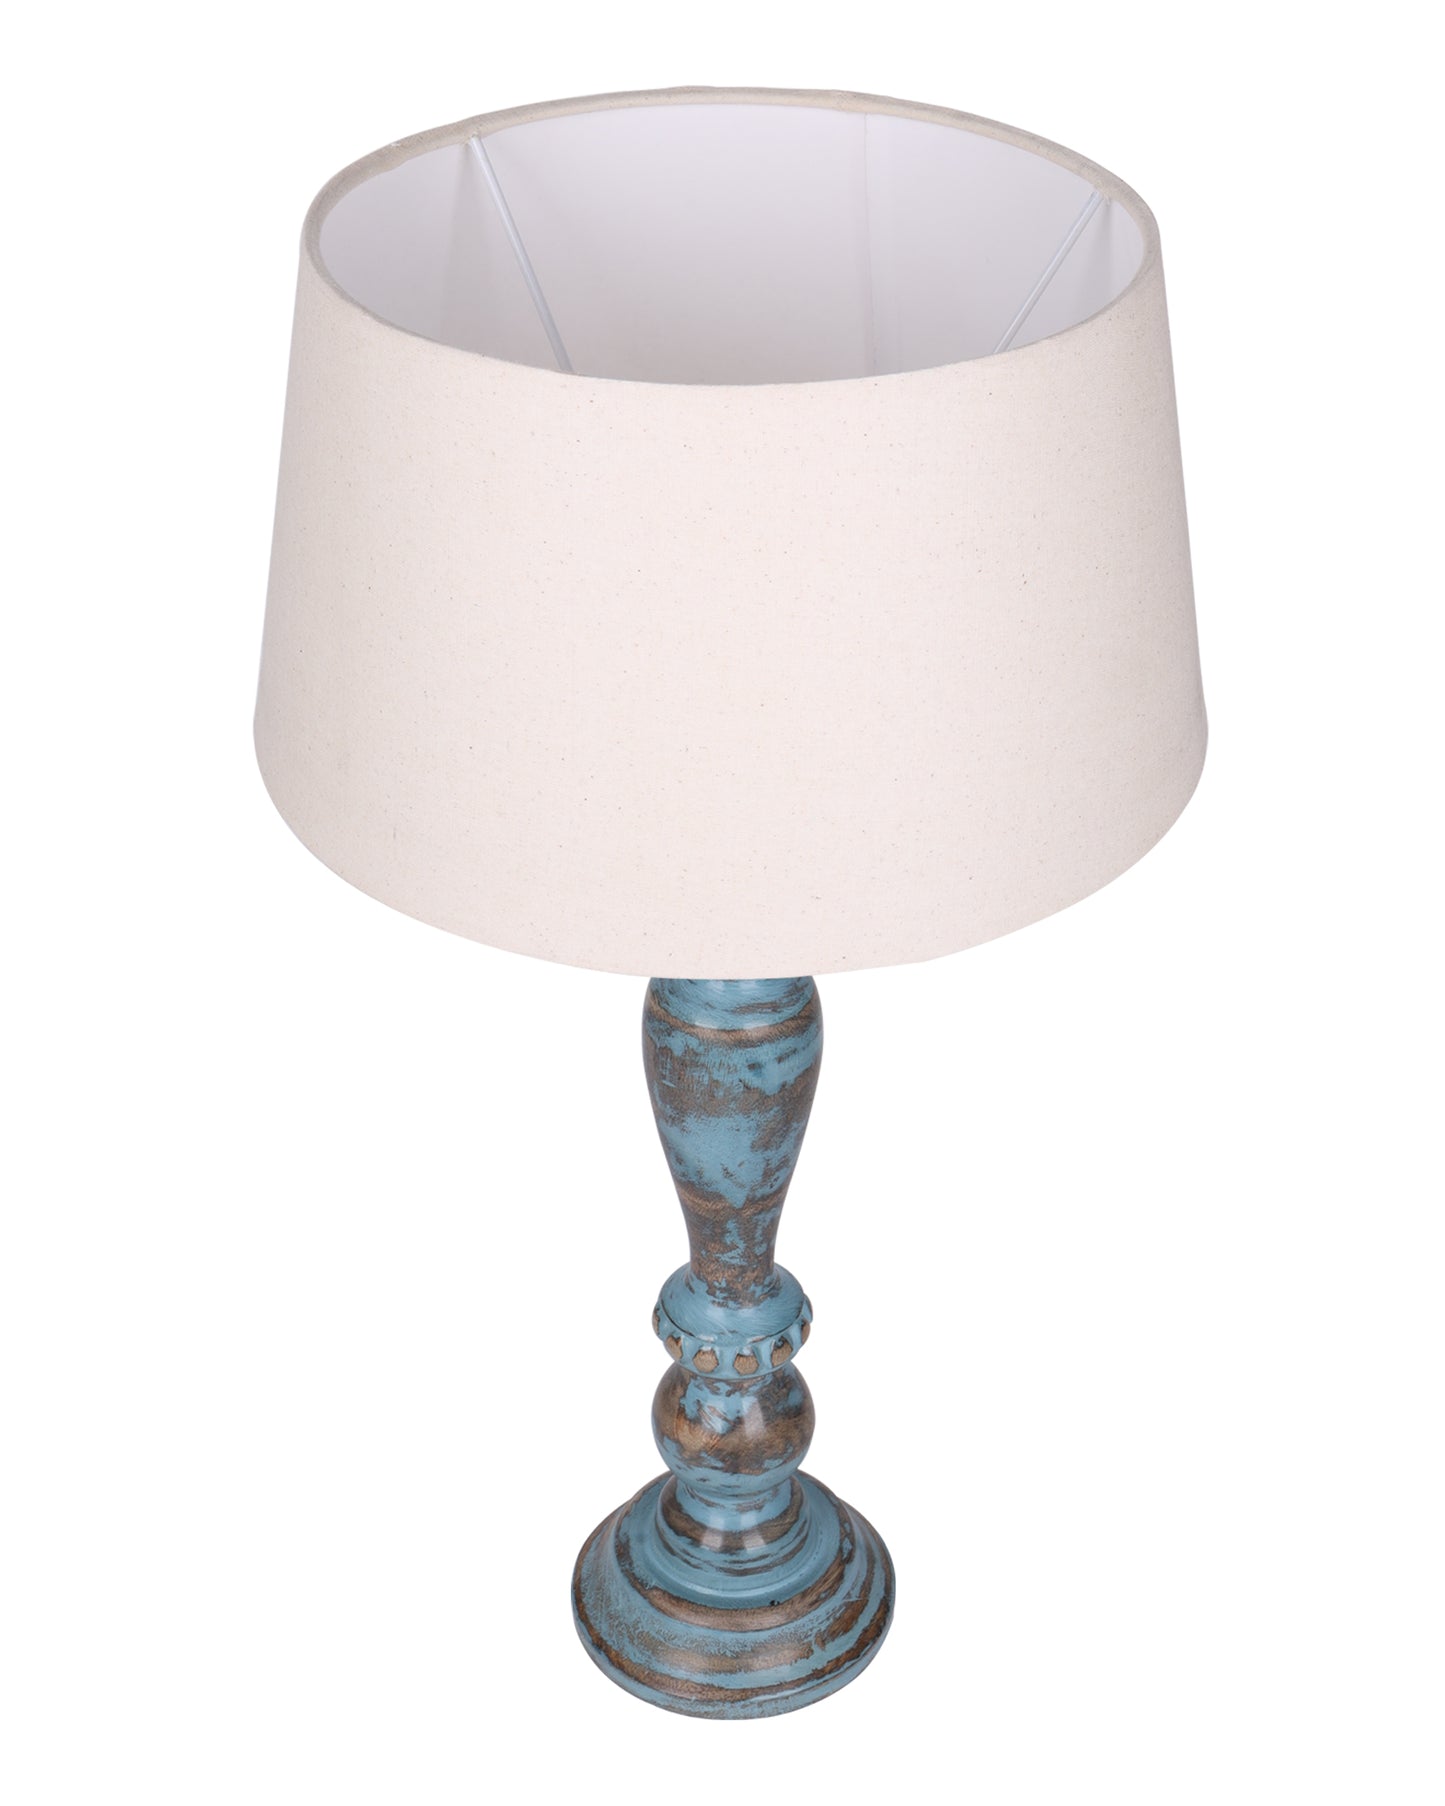 Eureka Polka Wood Table Lamp Bedside Distressed Living Room Light